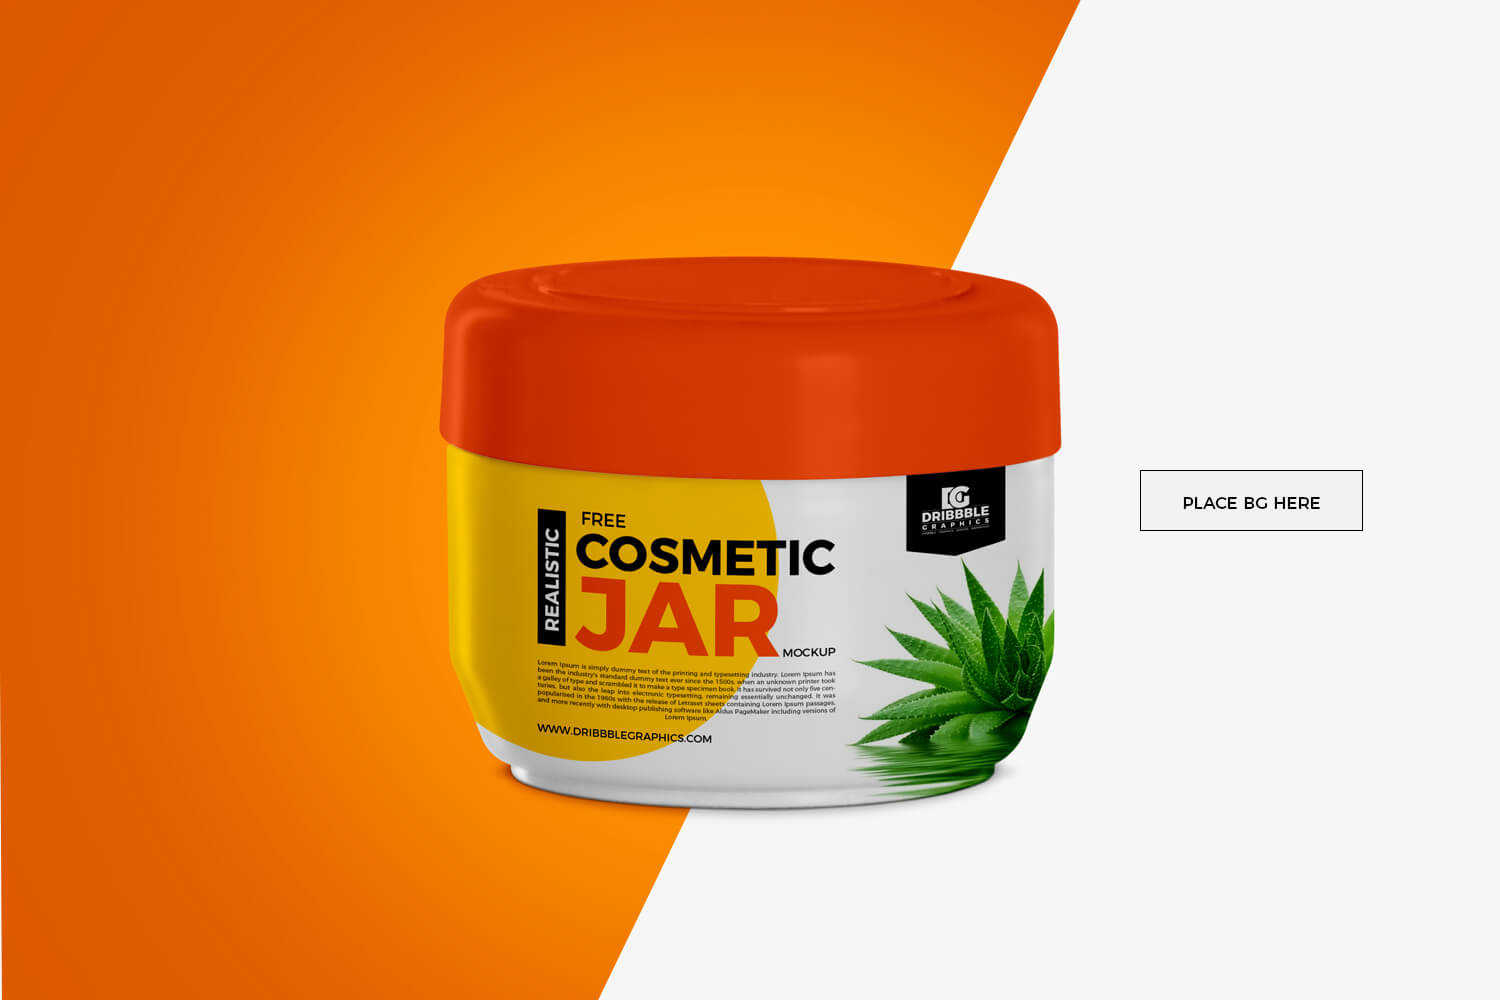 Free Cosmetic Jar Mockup 600